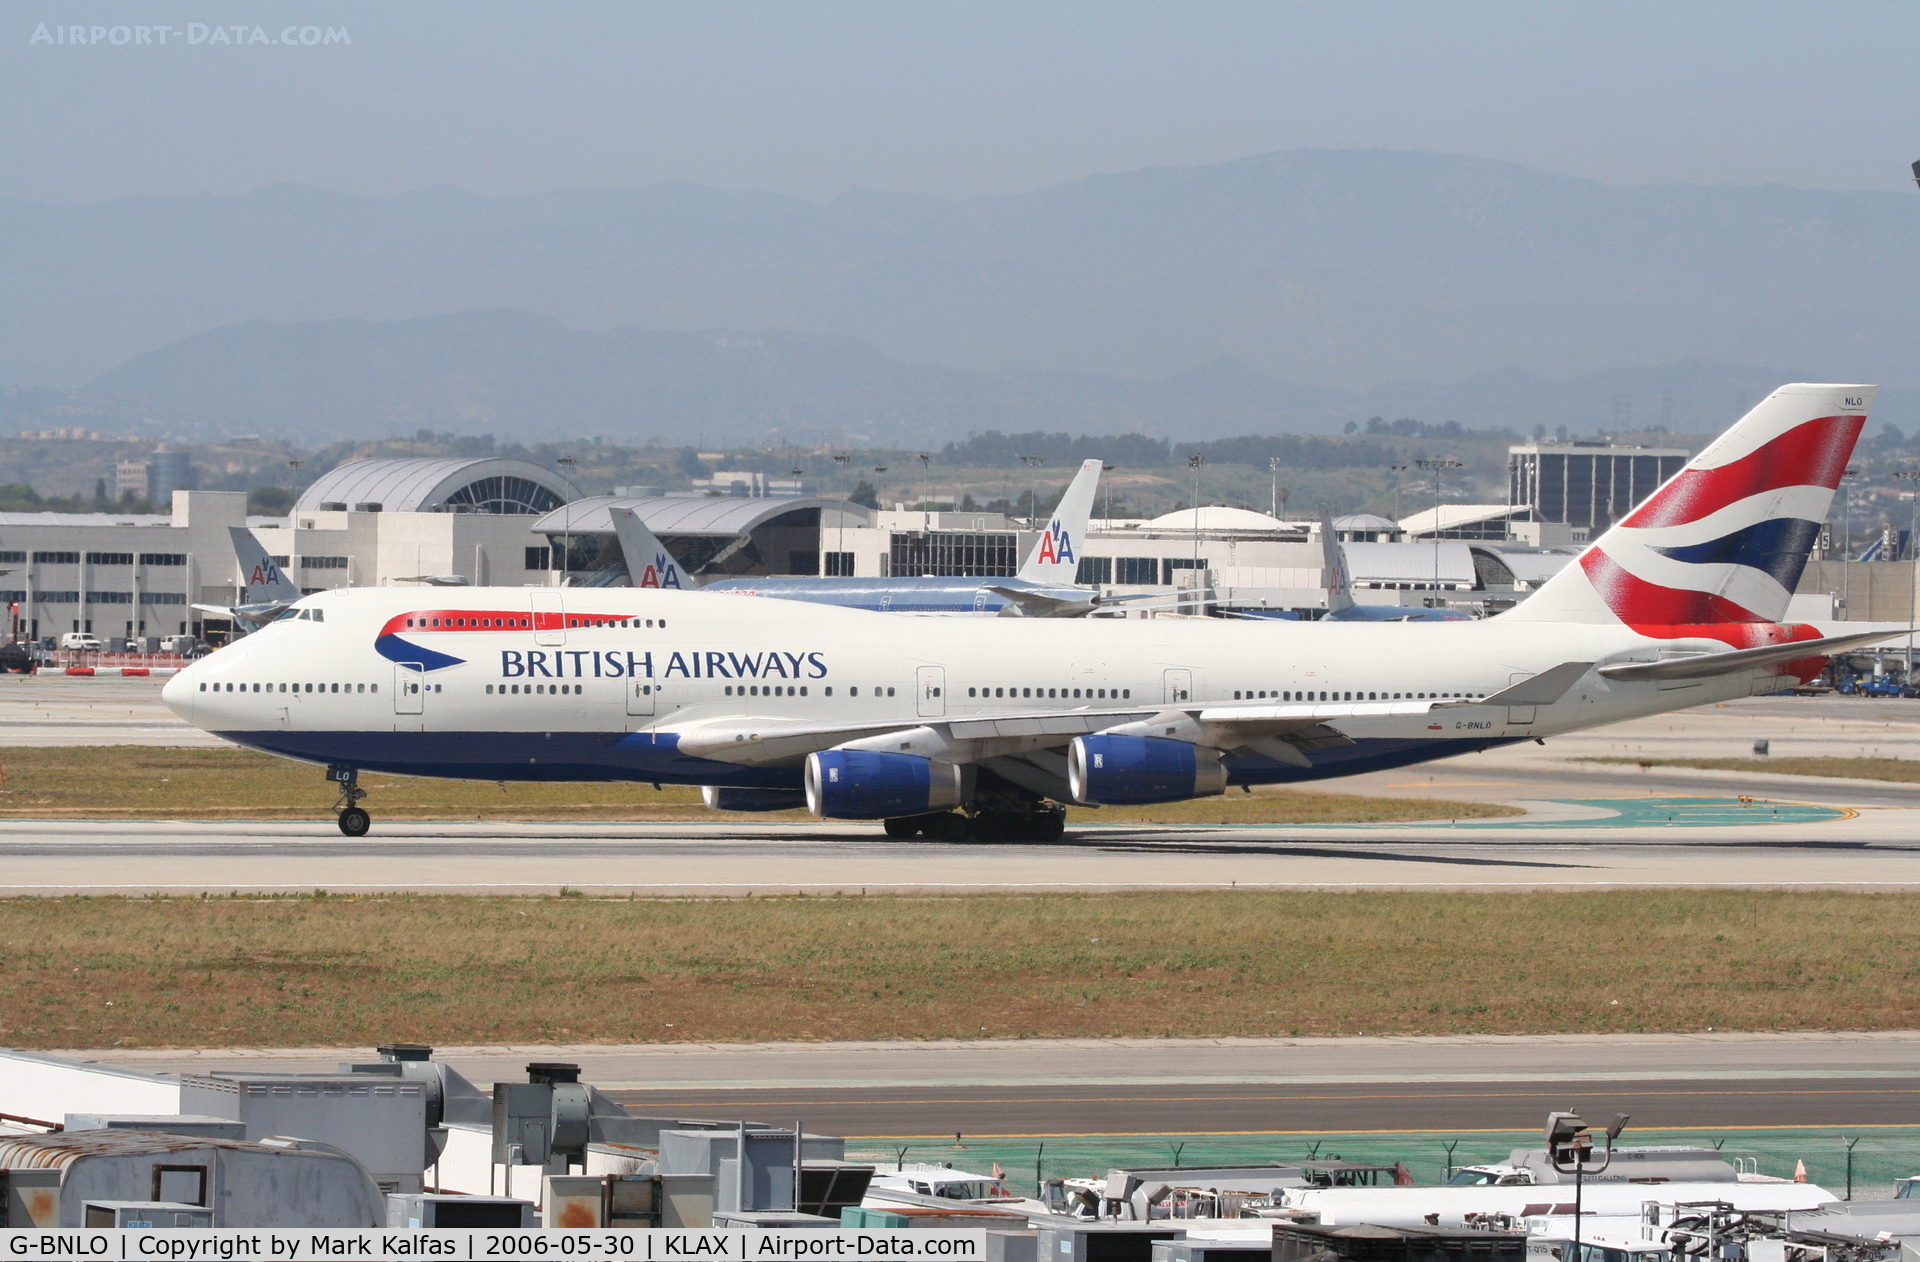 G-BNLO, 1990 Boeing 747-436 C/N 24057, British Airways 747-436, G-BNLO arriving KLAX 25L from London